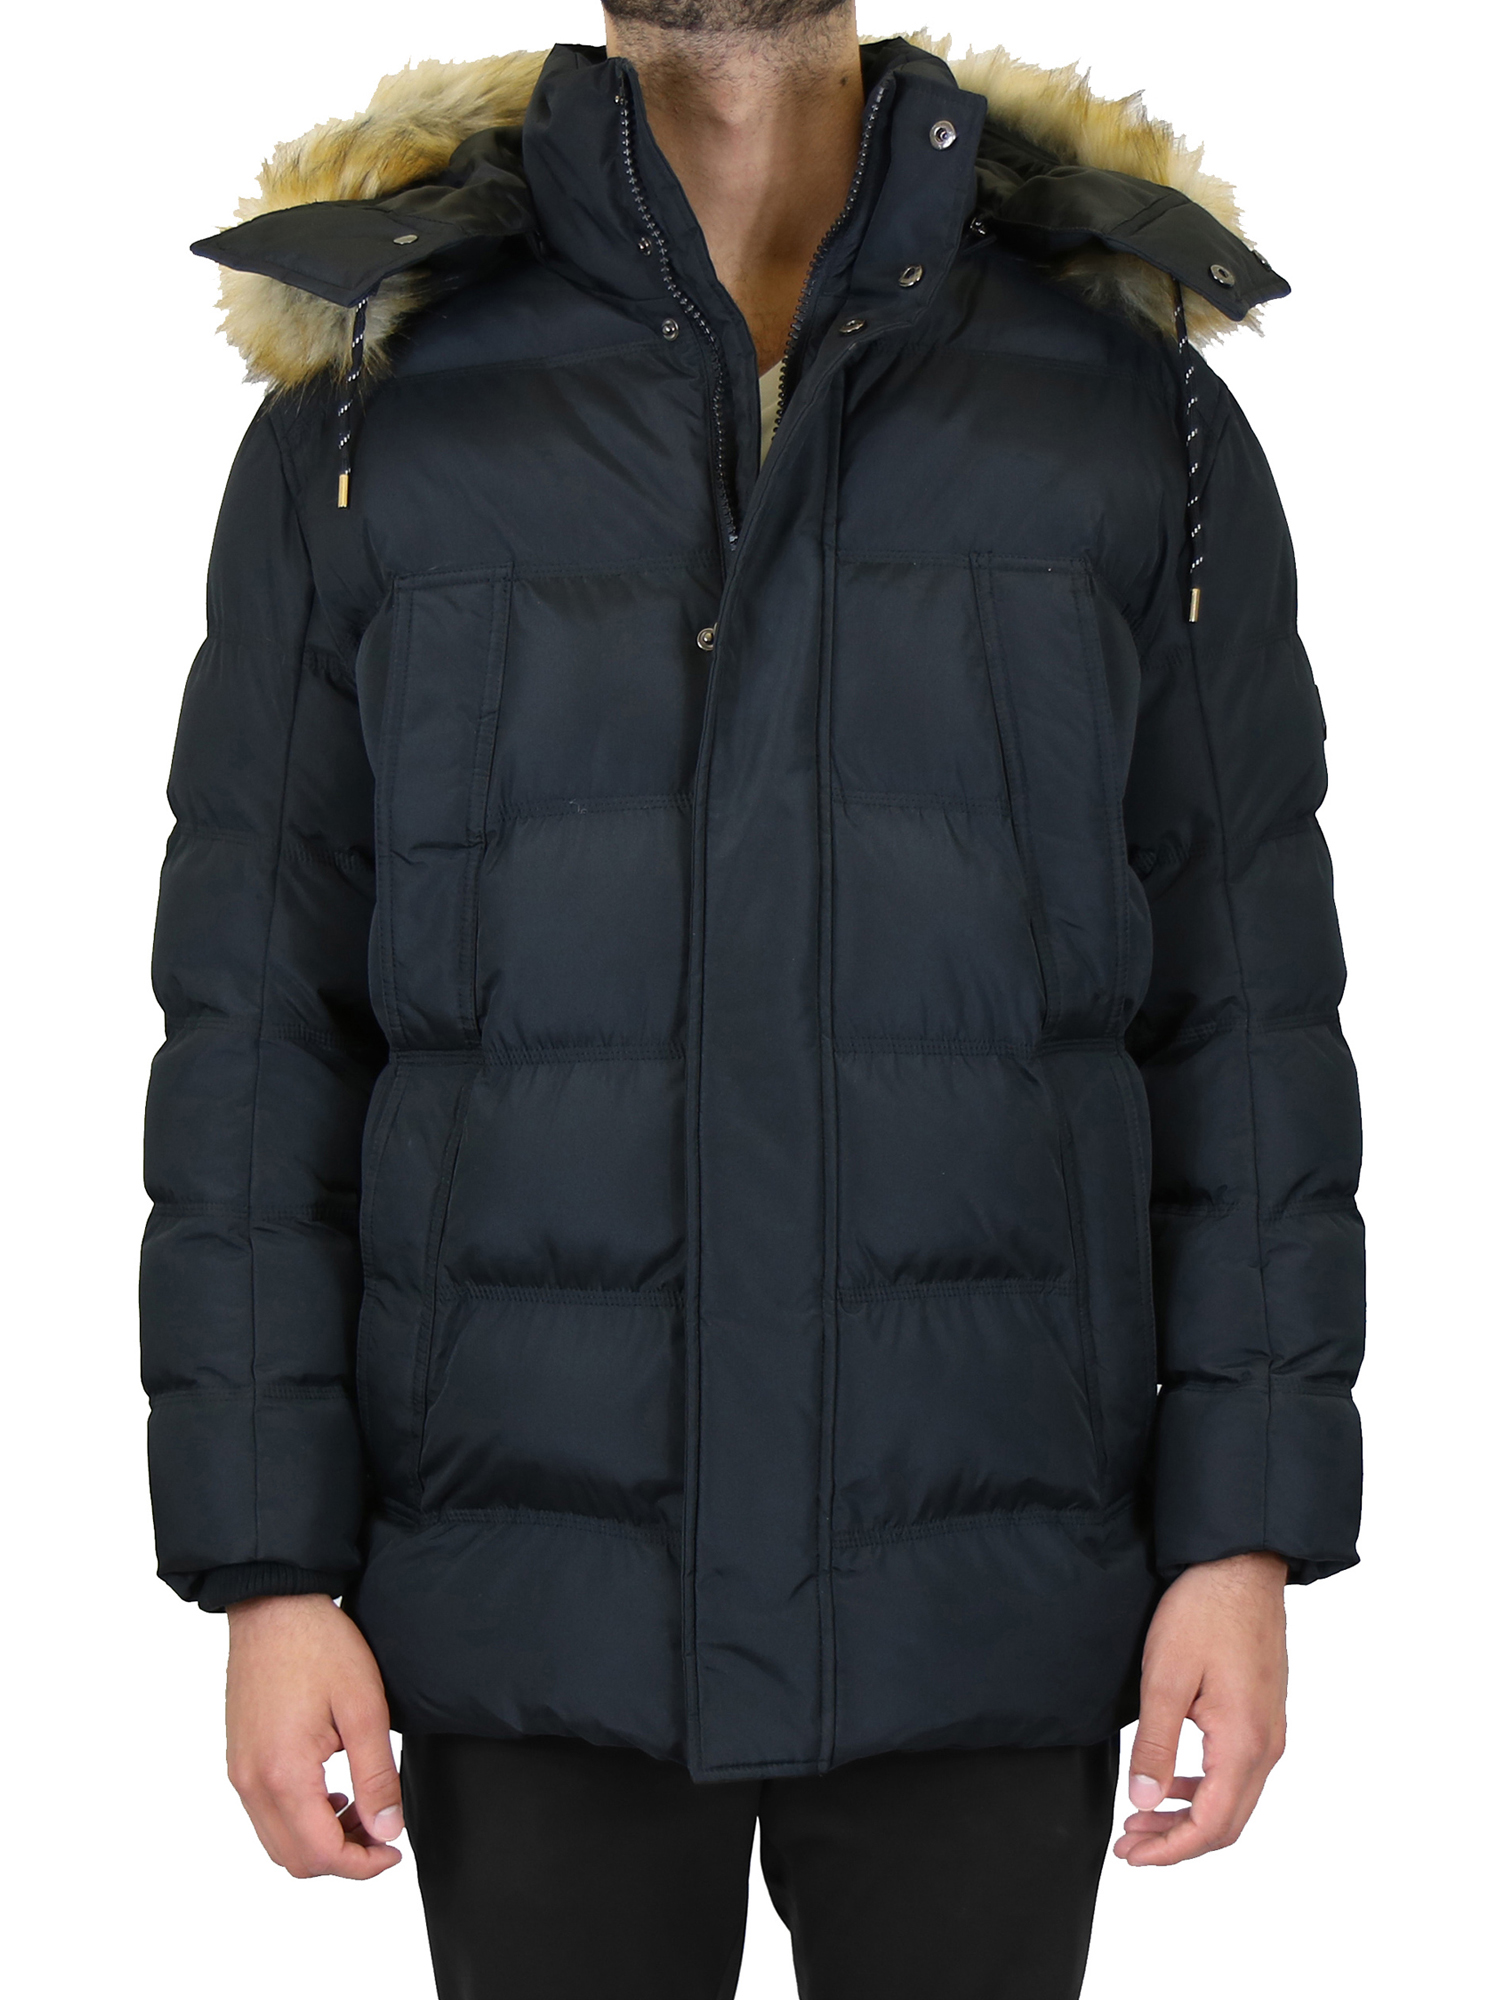 Men's Heavyweight Long Bubble Parka Jacket Winter Coat - image 2 of 5